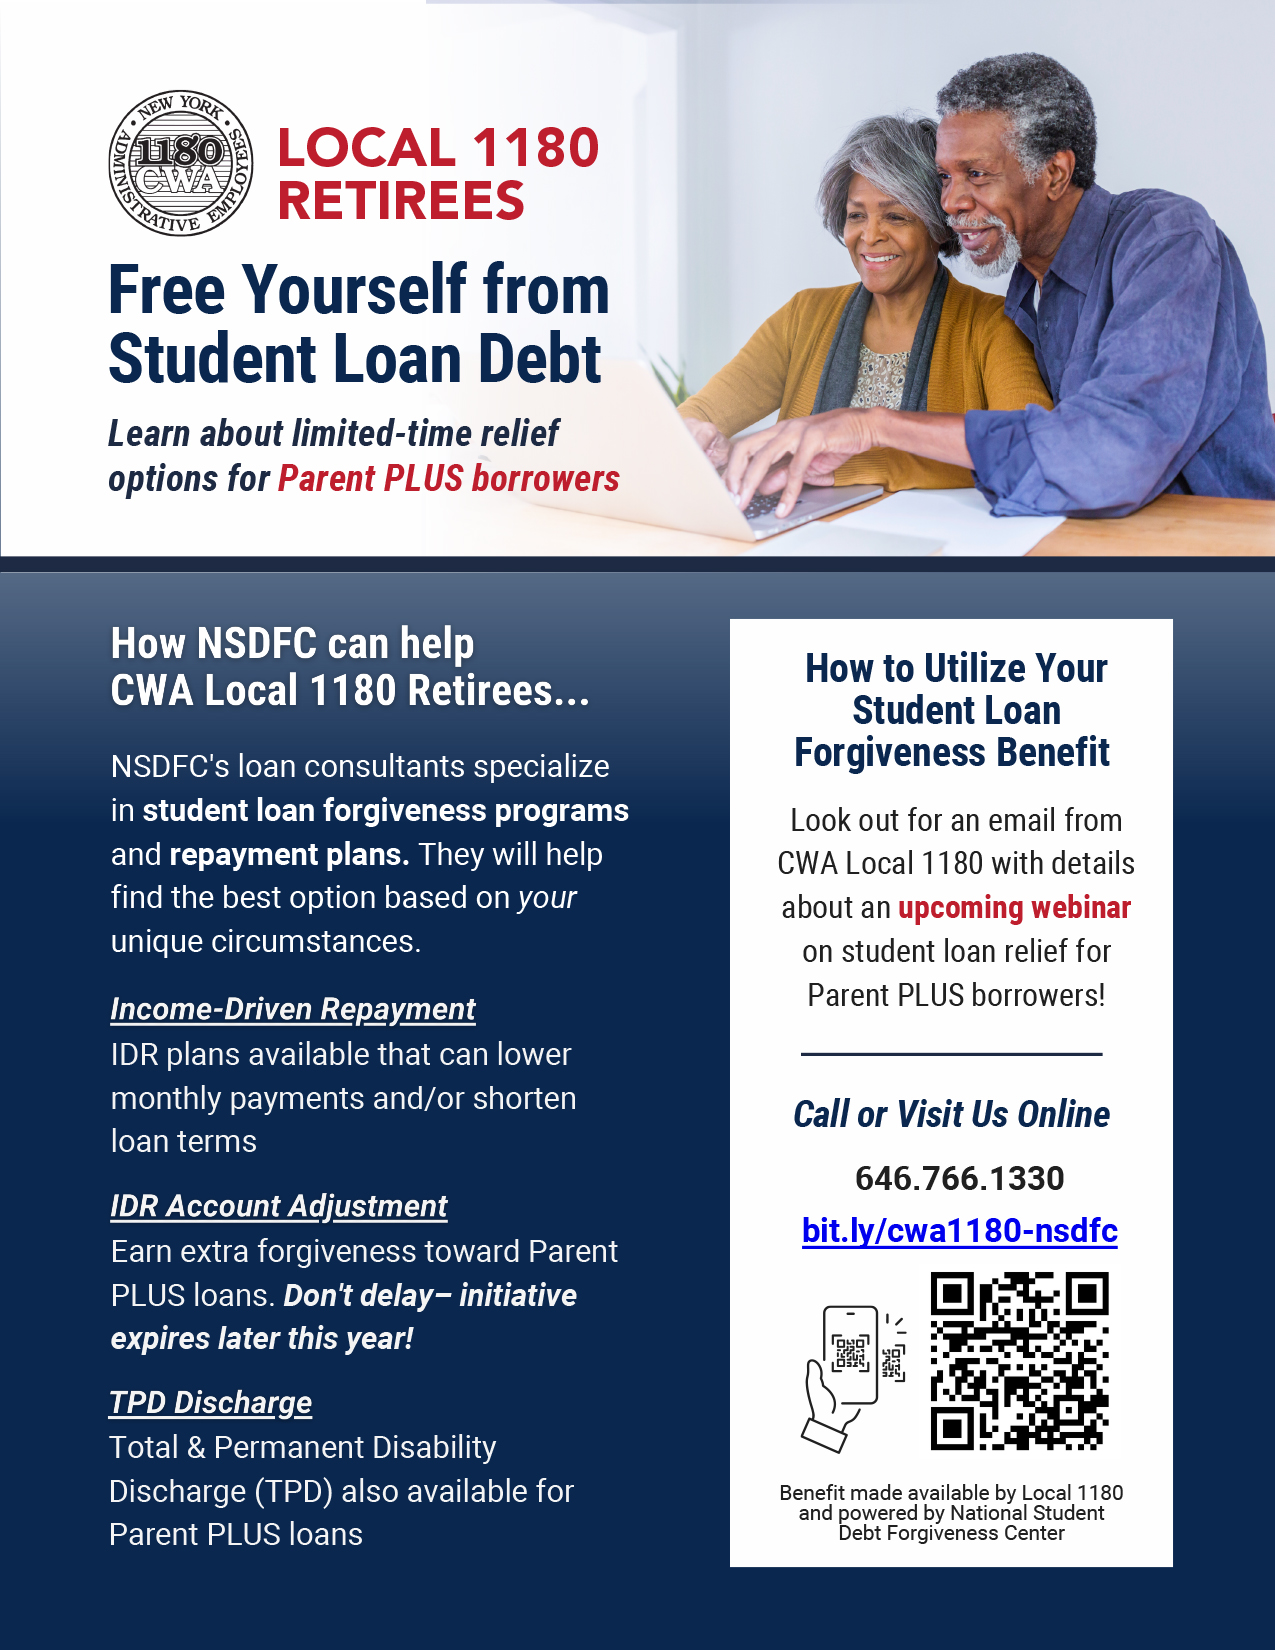 Student Loan Debt Relief for Parent PLUS Borrowers